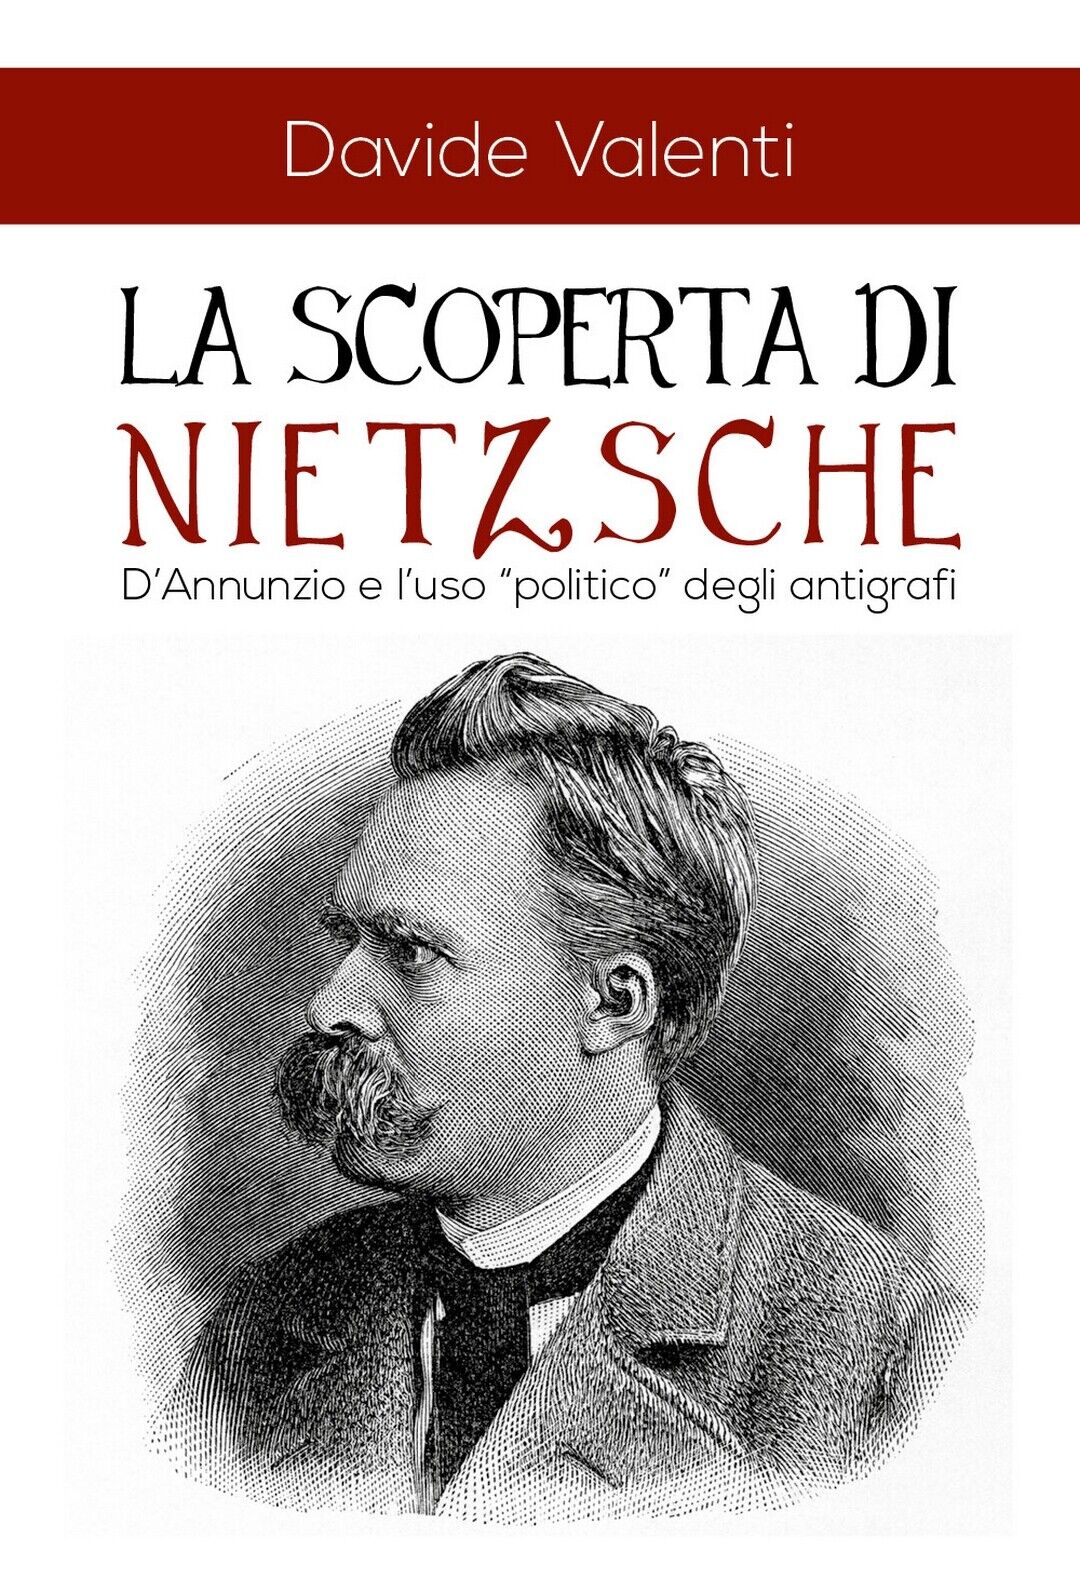 La scoperta di Nietzsche  di Davide Valenti,  2018,  Youcanprint